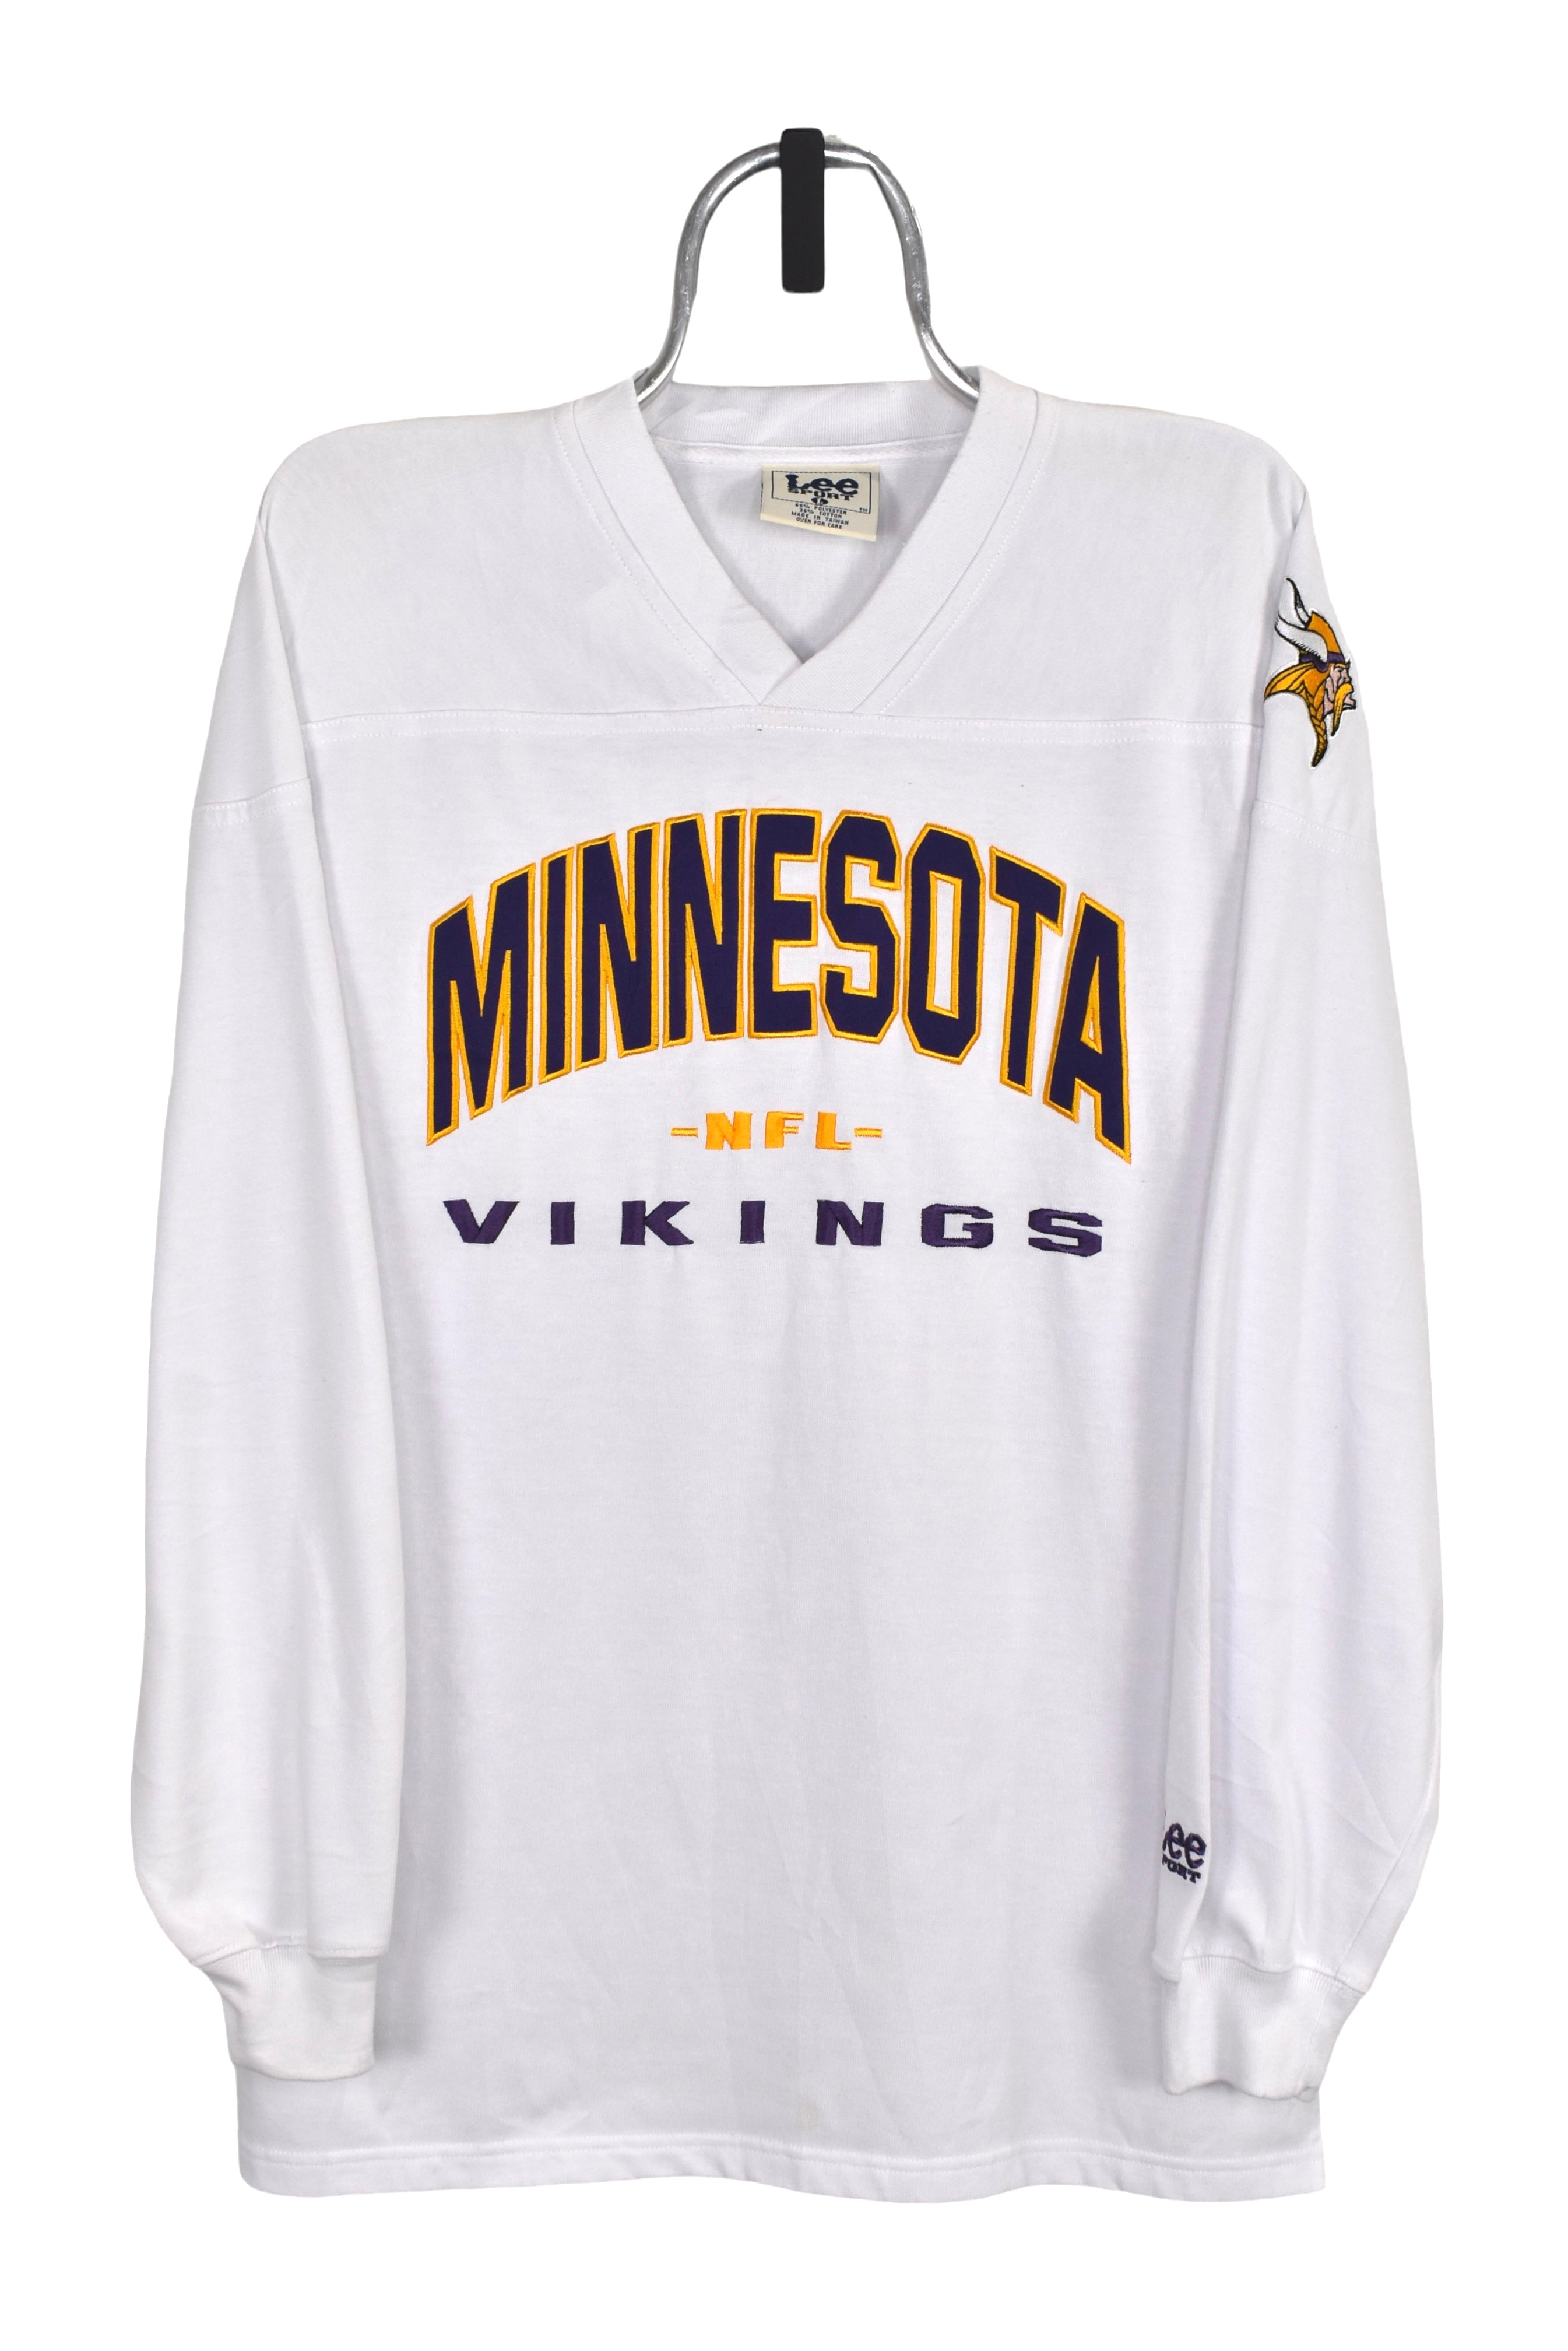 Vintage Minnesota Vikings sweatshirt (L), white NFL embroidered v-neck